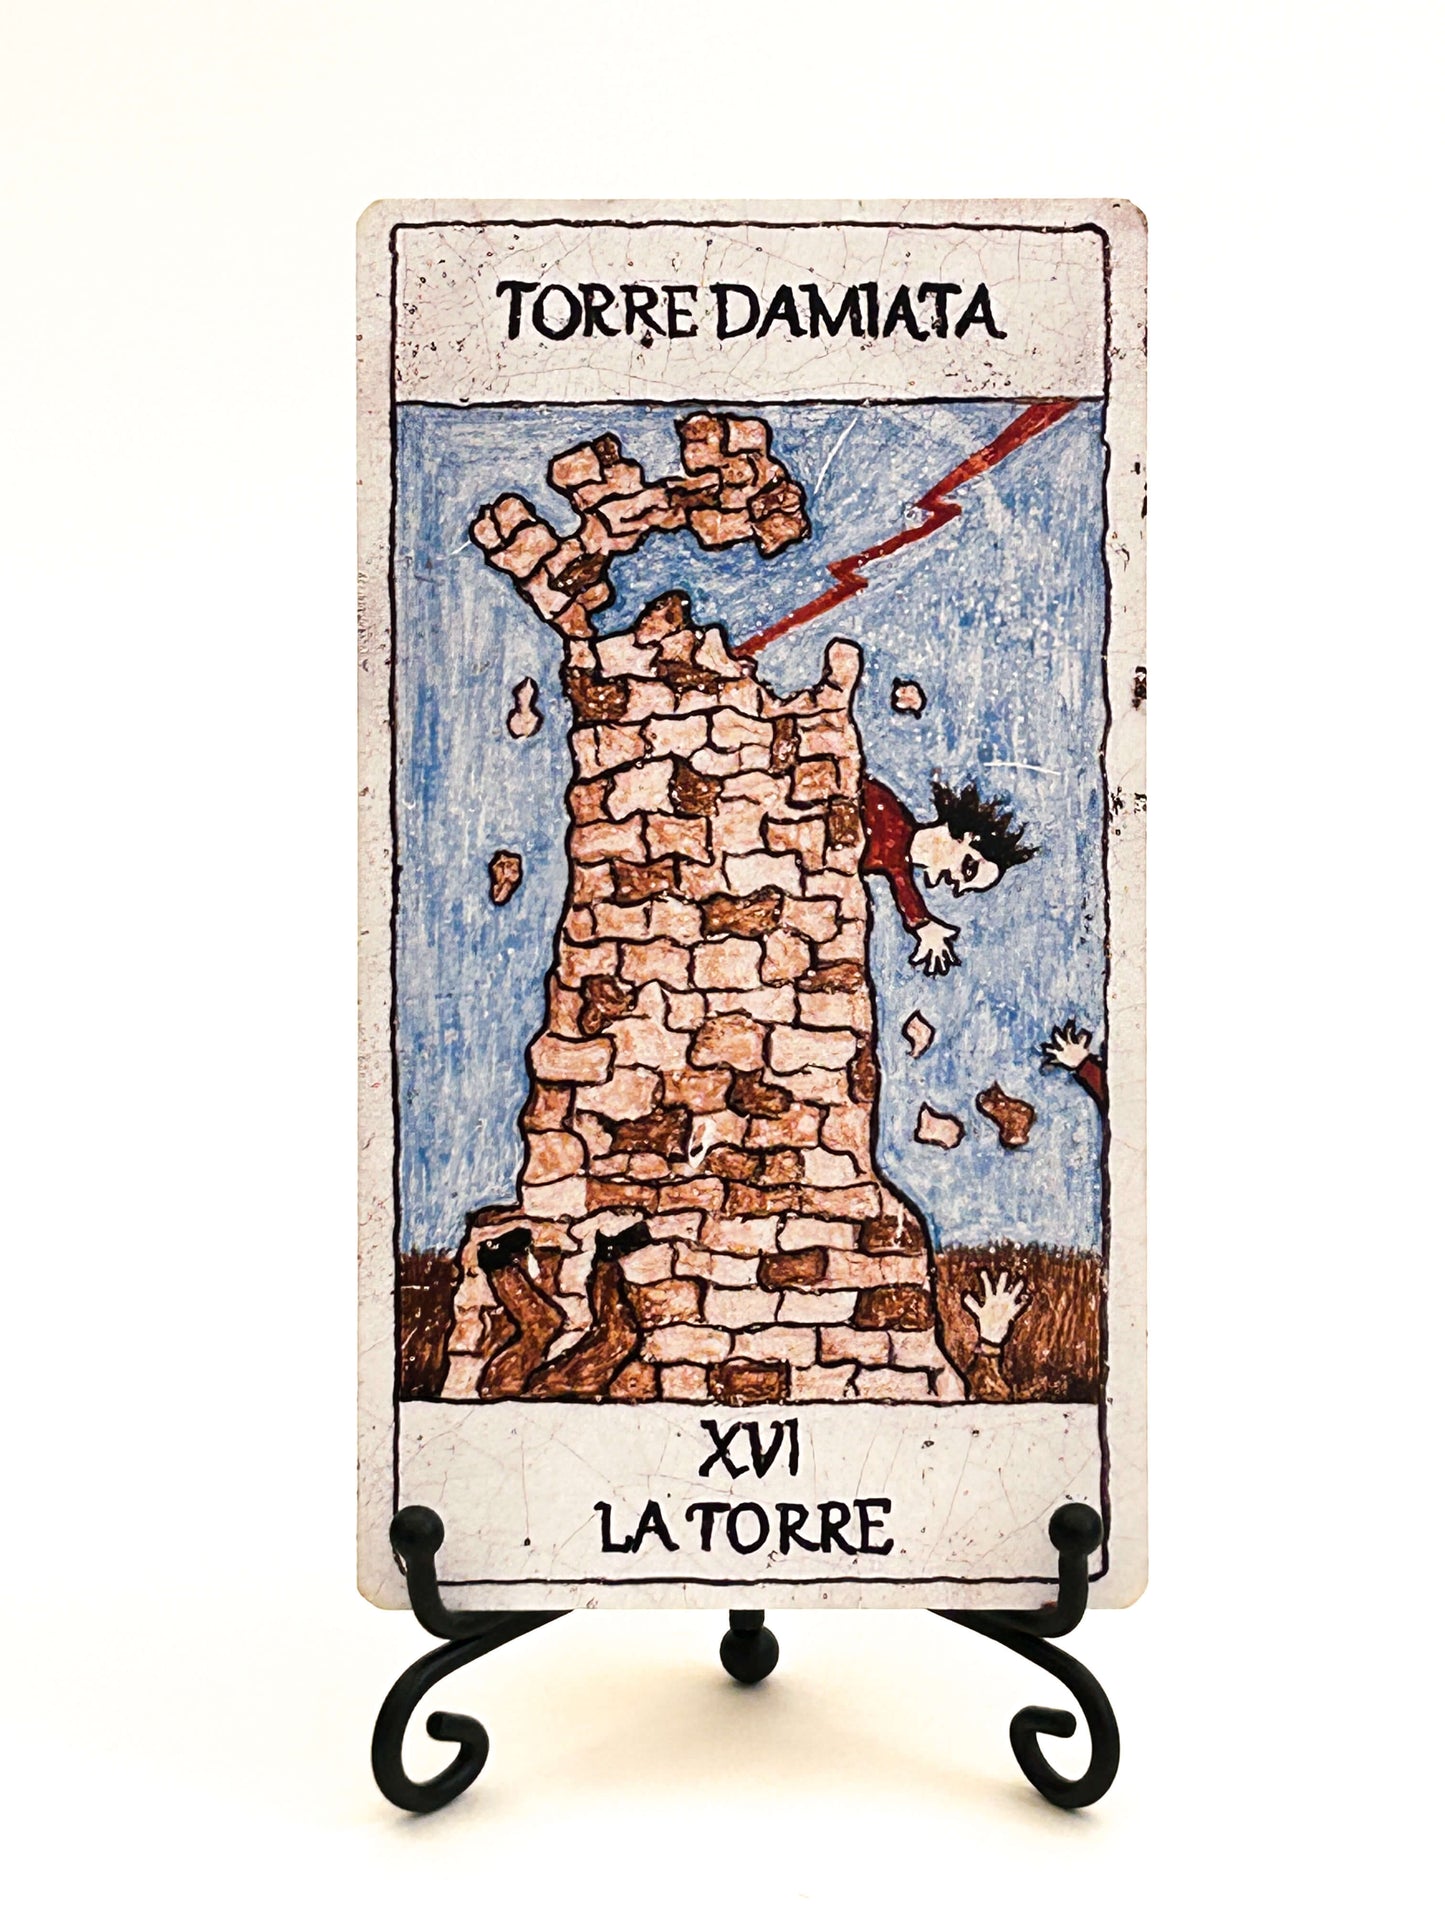 Tarot Cards: The Major Arcana of Faul